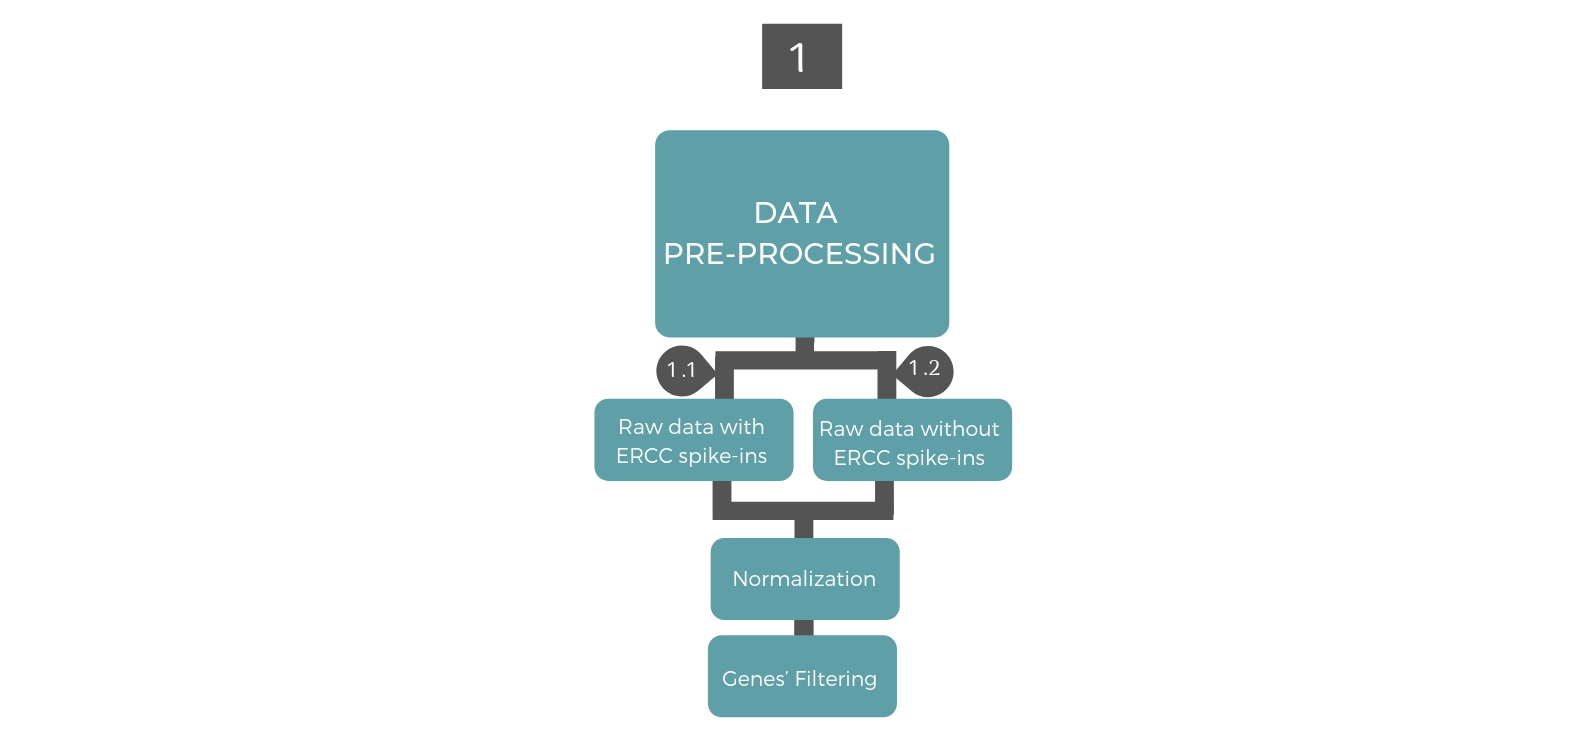 DataPre-processing